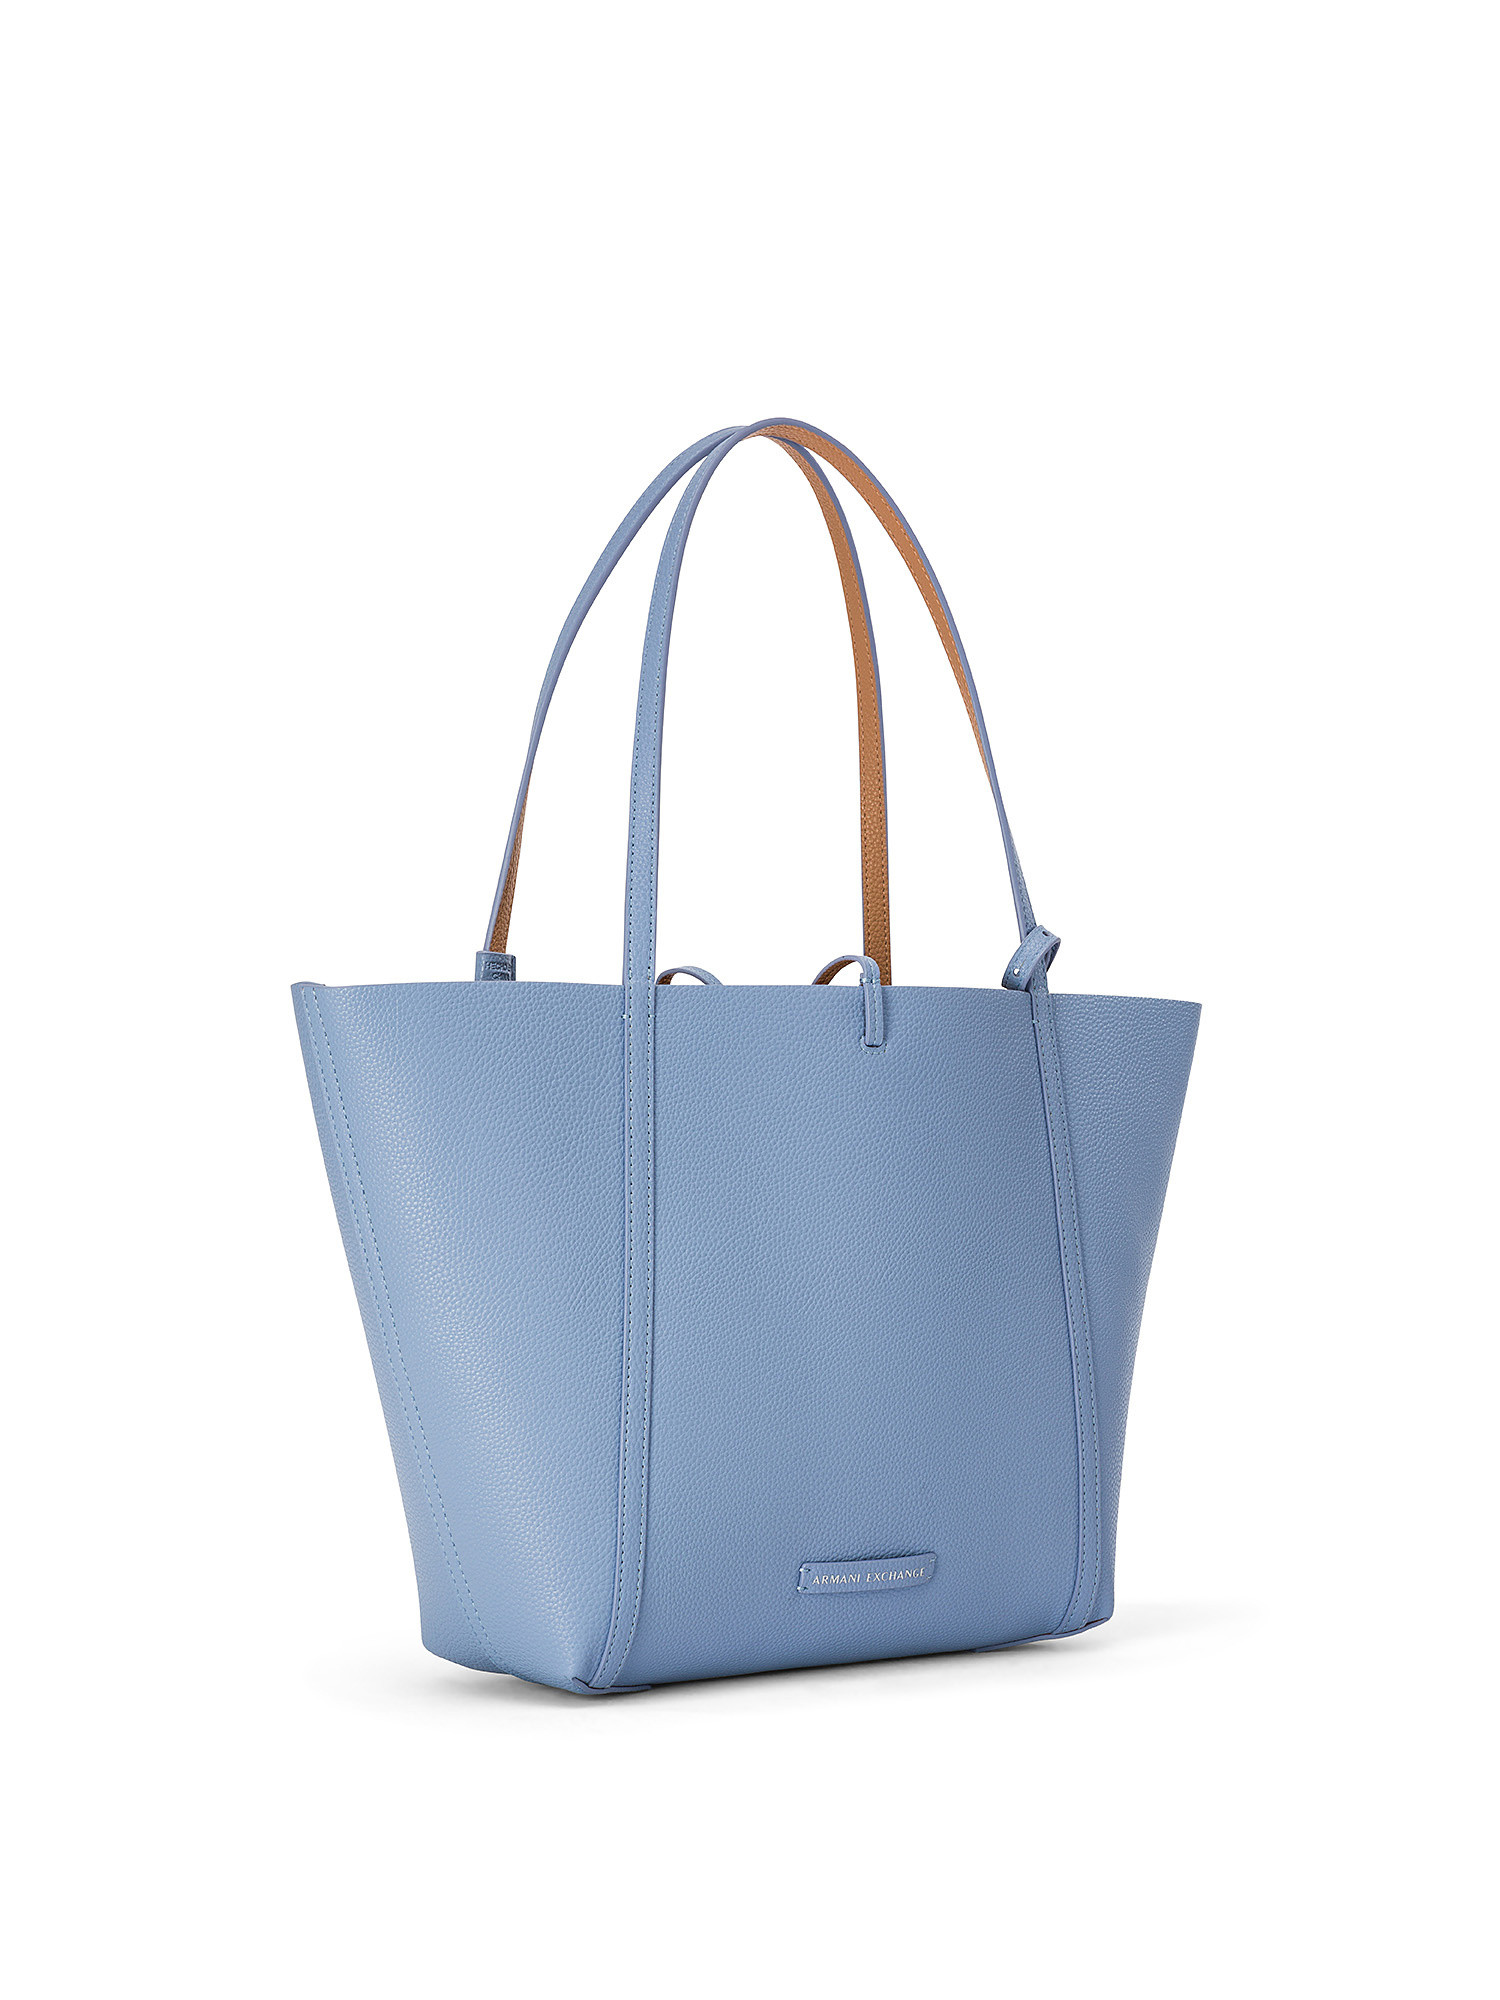 Armani Exchange - Reversible tote bag with logo, Light Blue, large image number 1